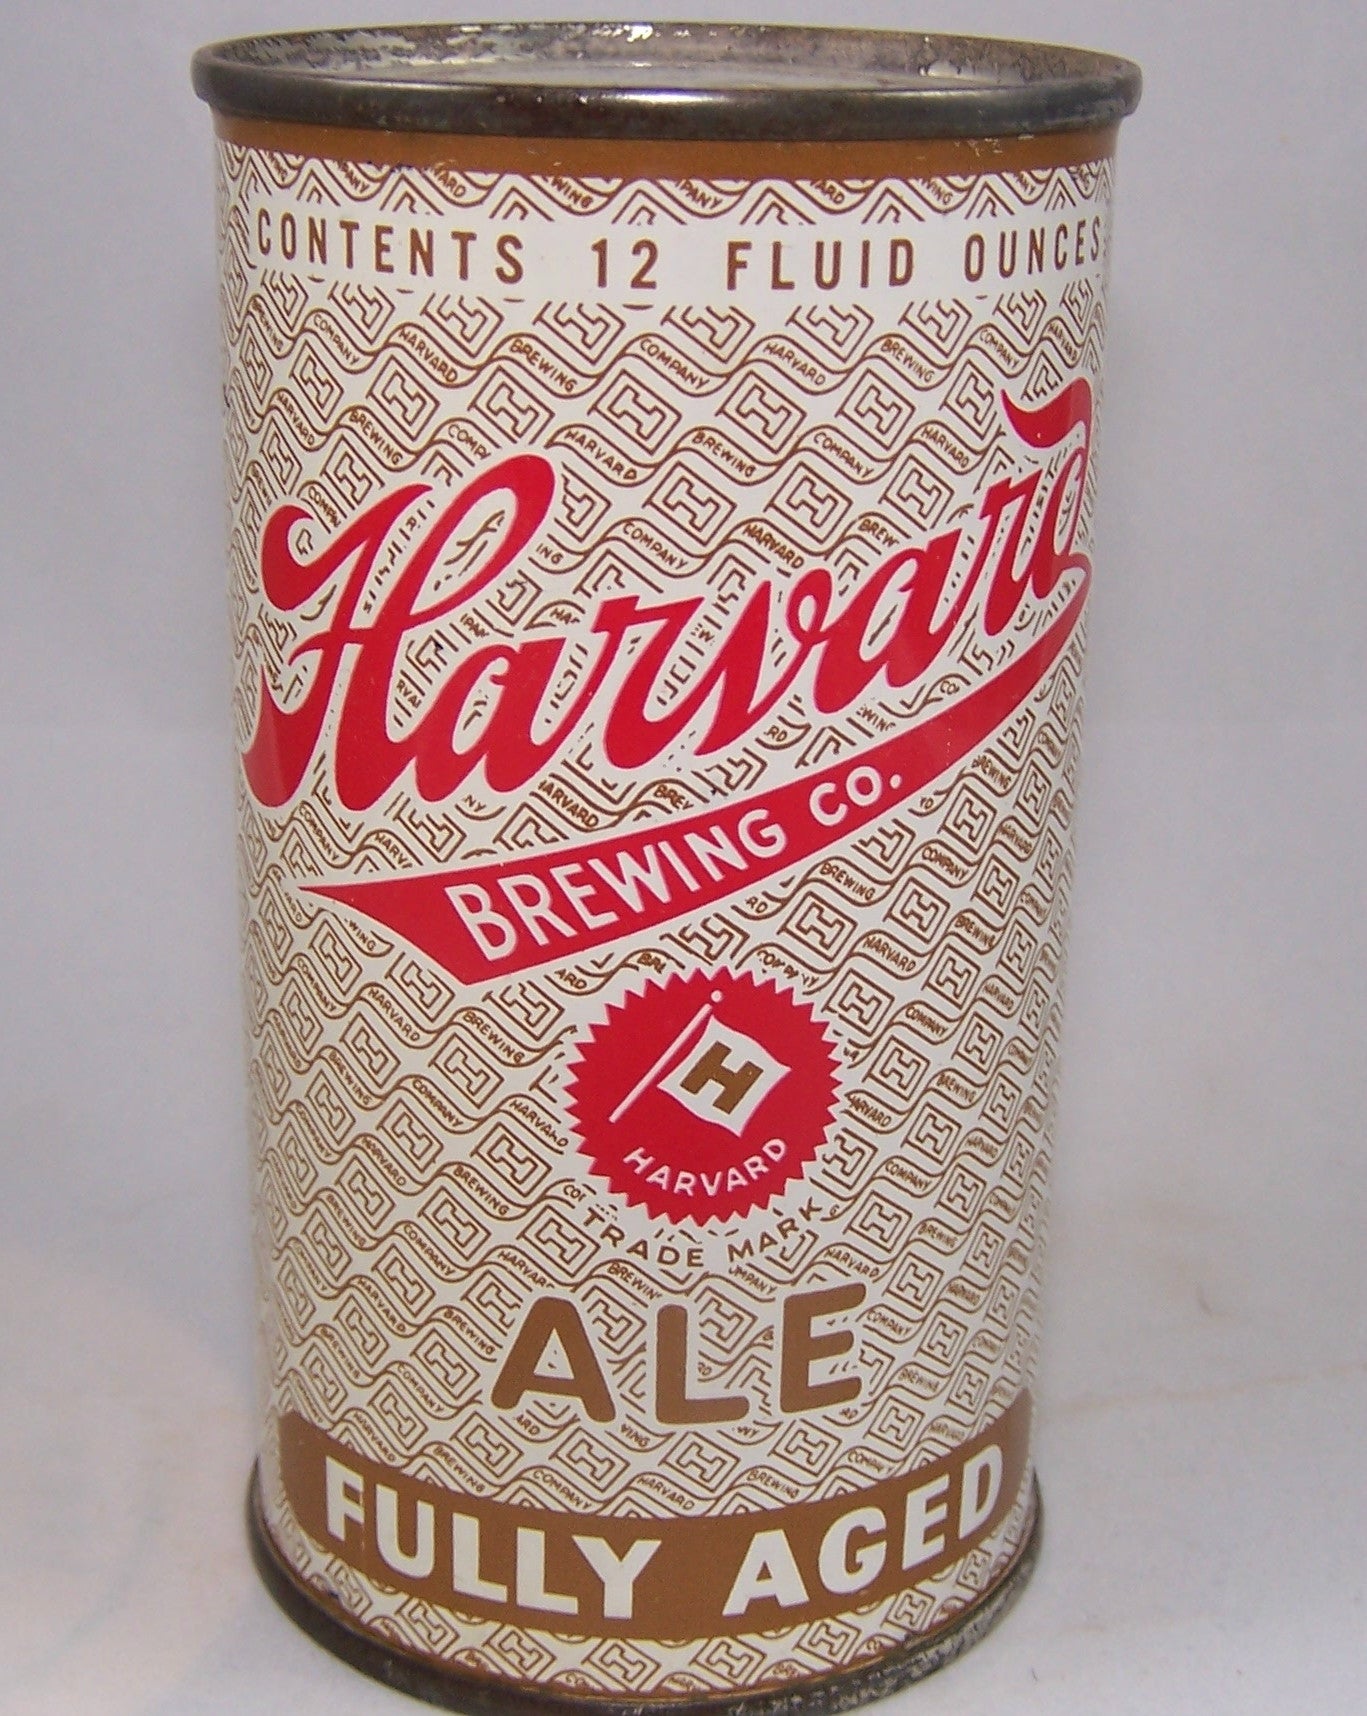 Harvard Ale Fully Aged, USBC 80-30, Grade 1/1+ Sold on 01/03/16